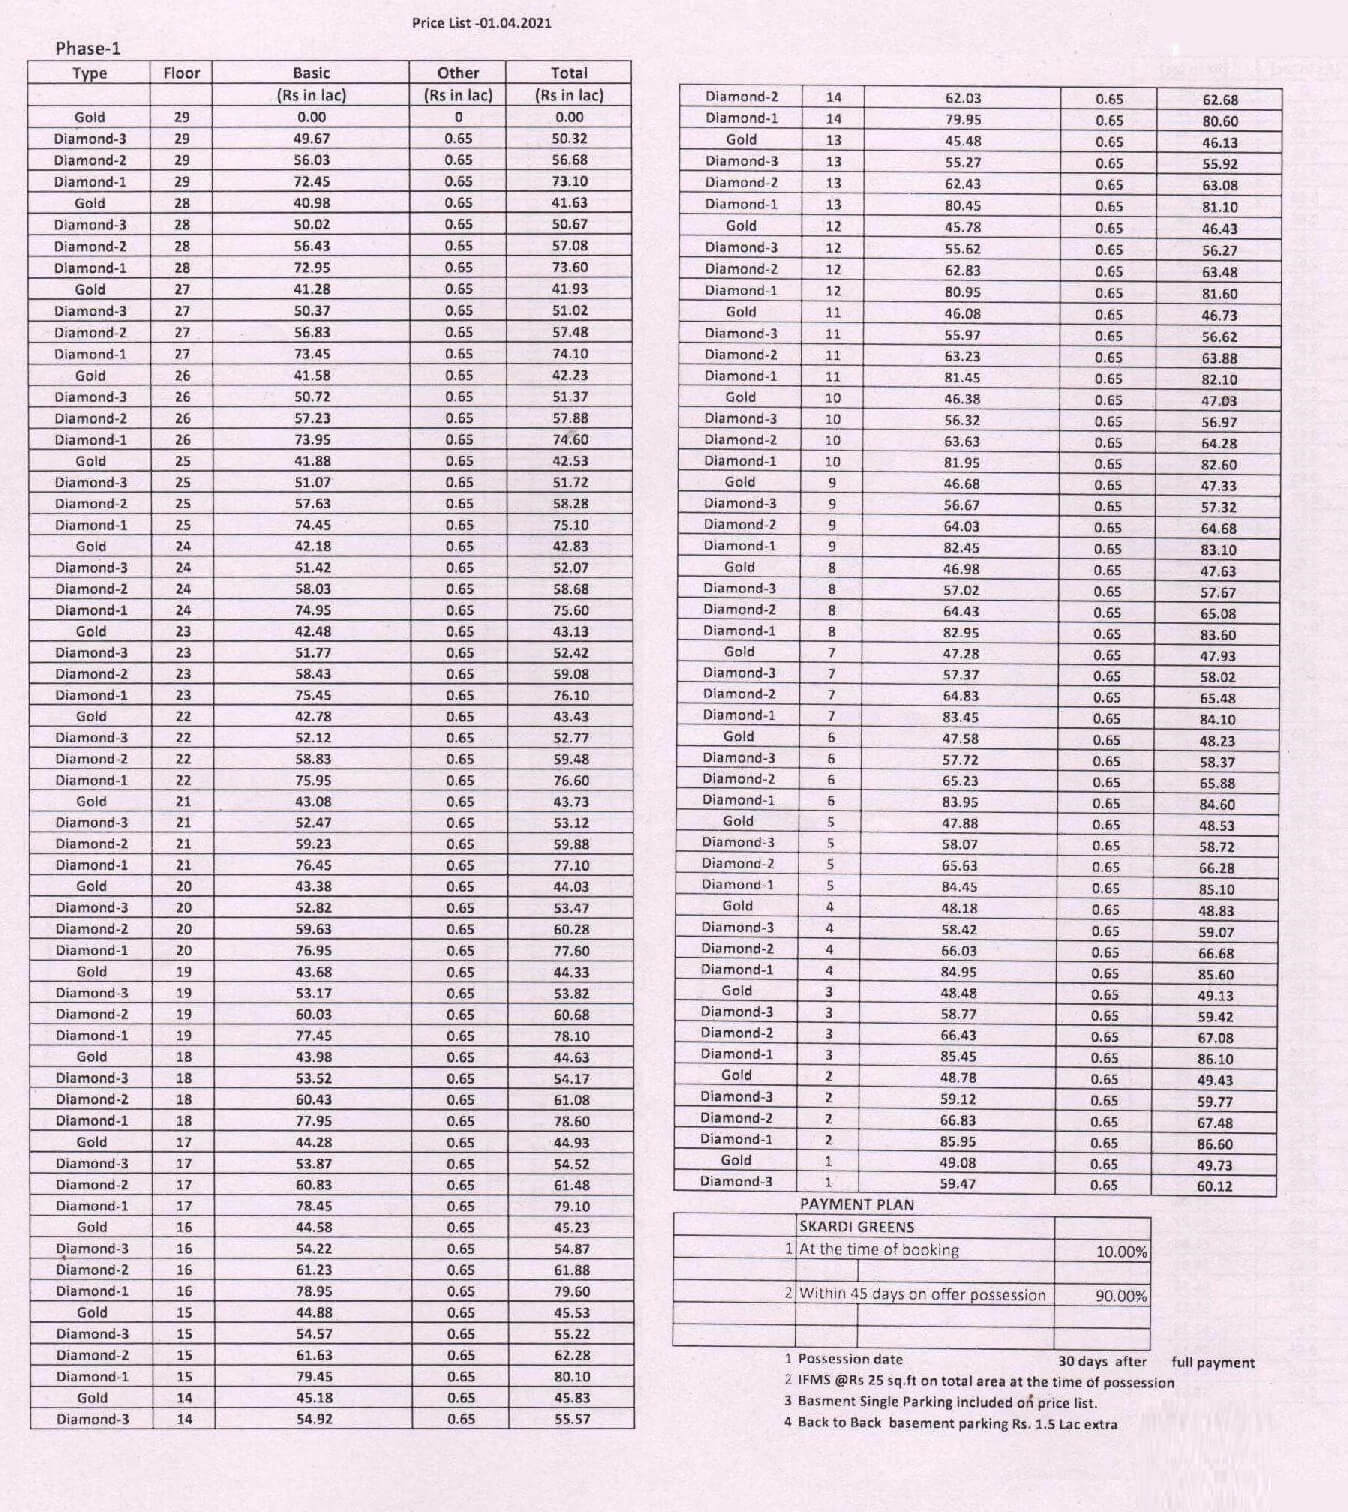 Skardi Greens Price List